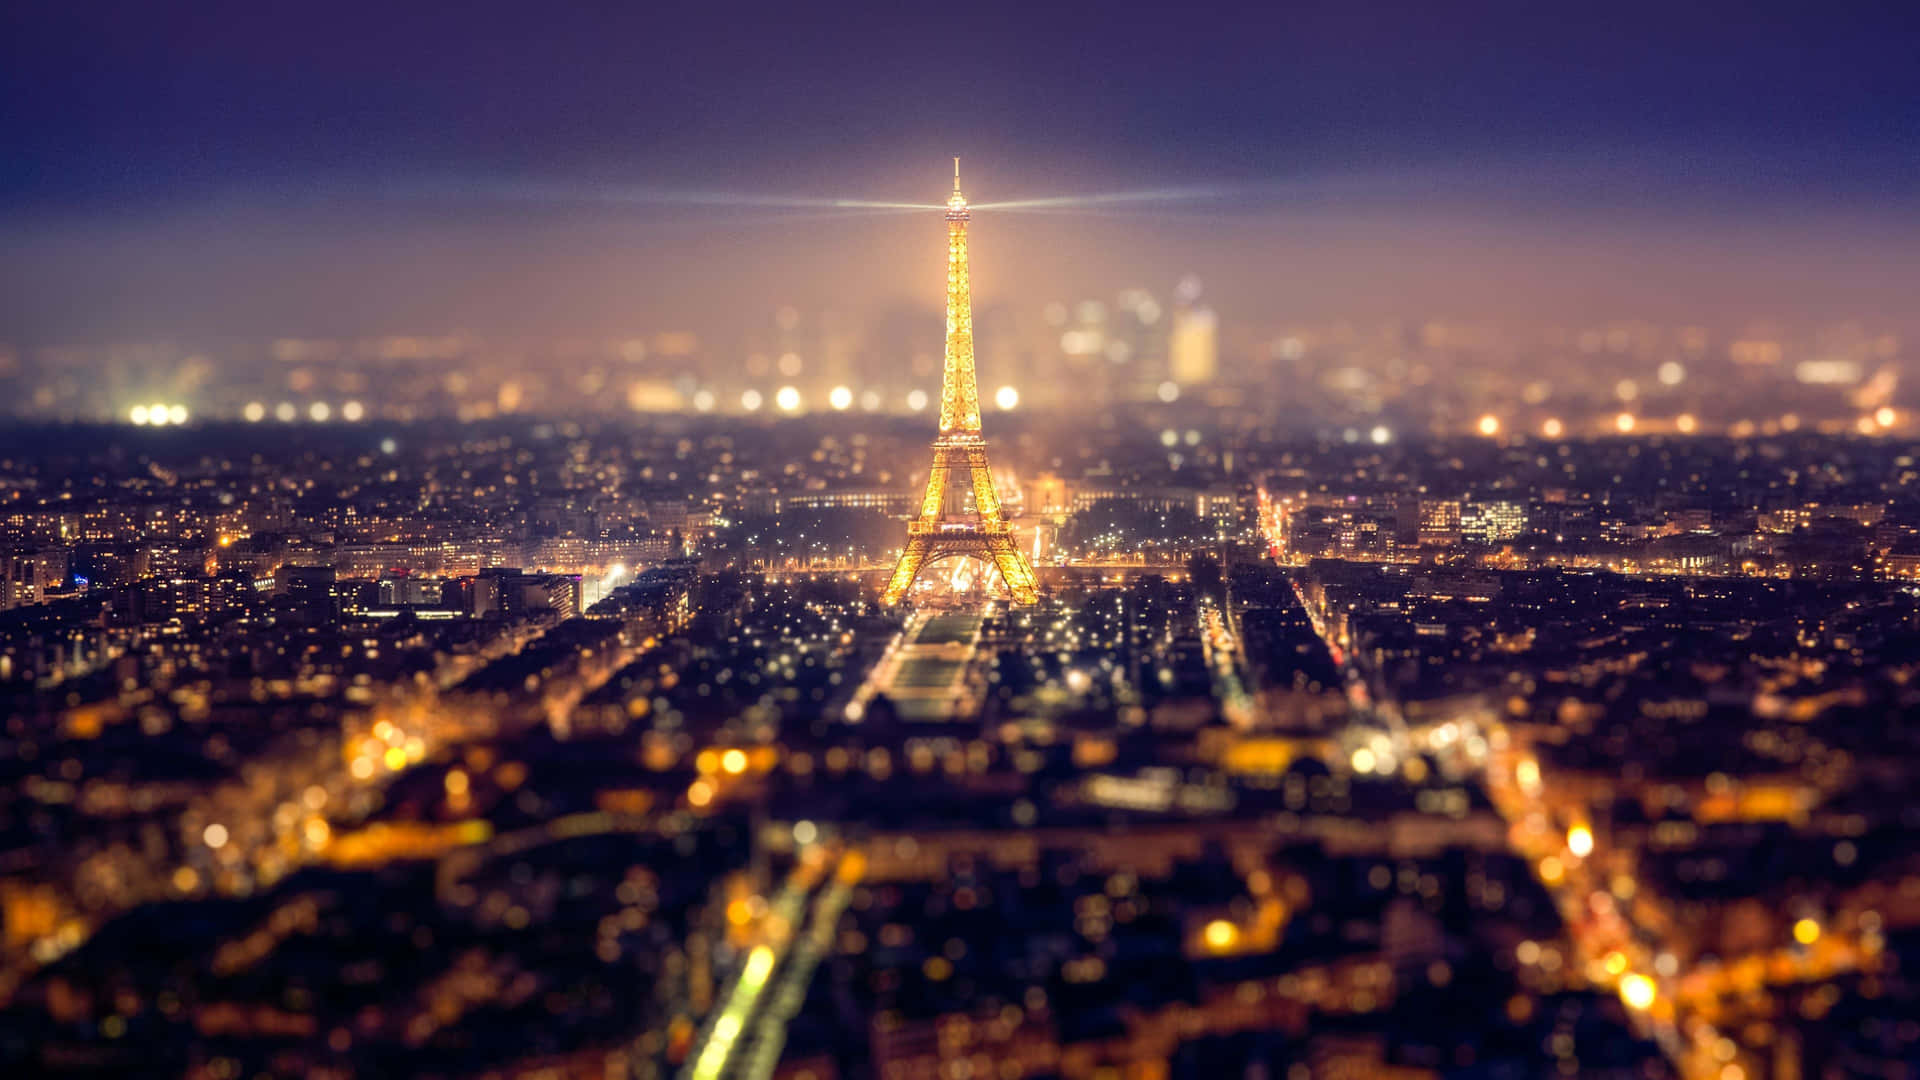 Image Illuminated Eiffel Tower In Paris At Night Background